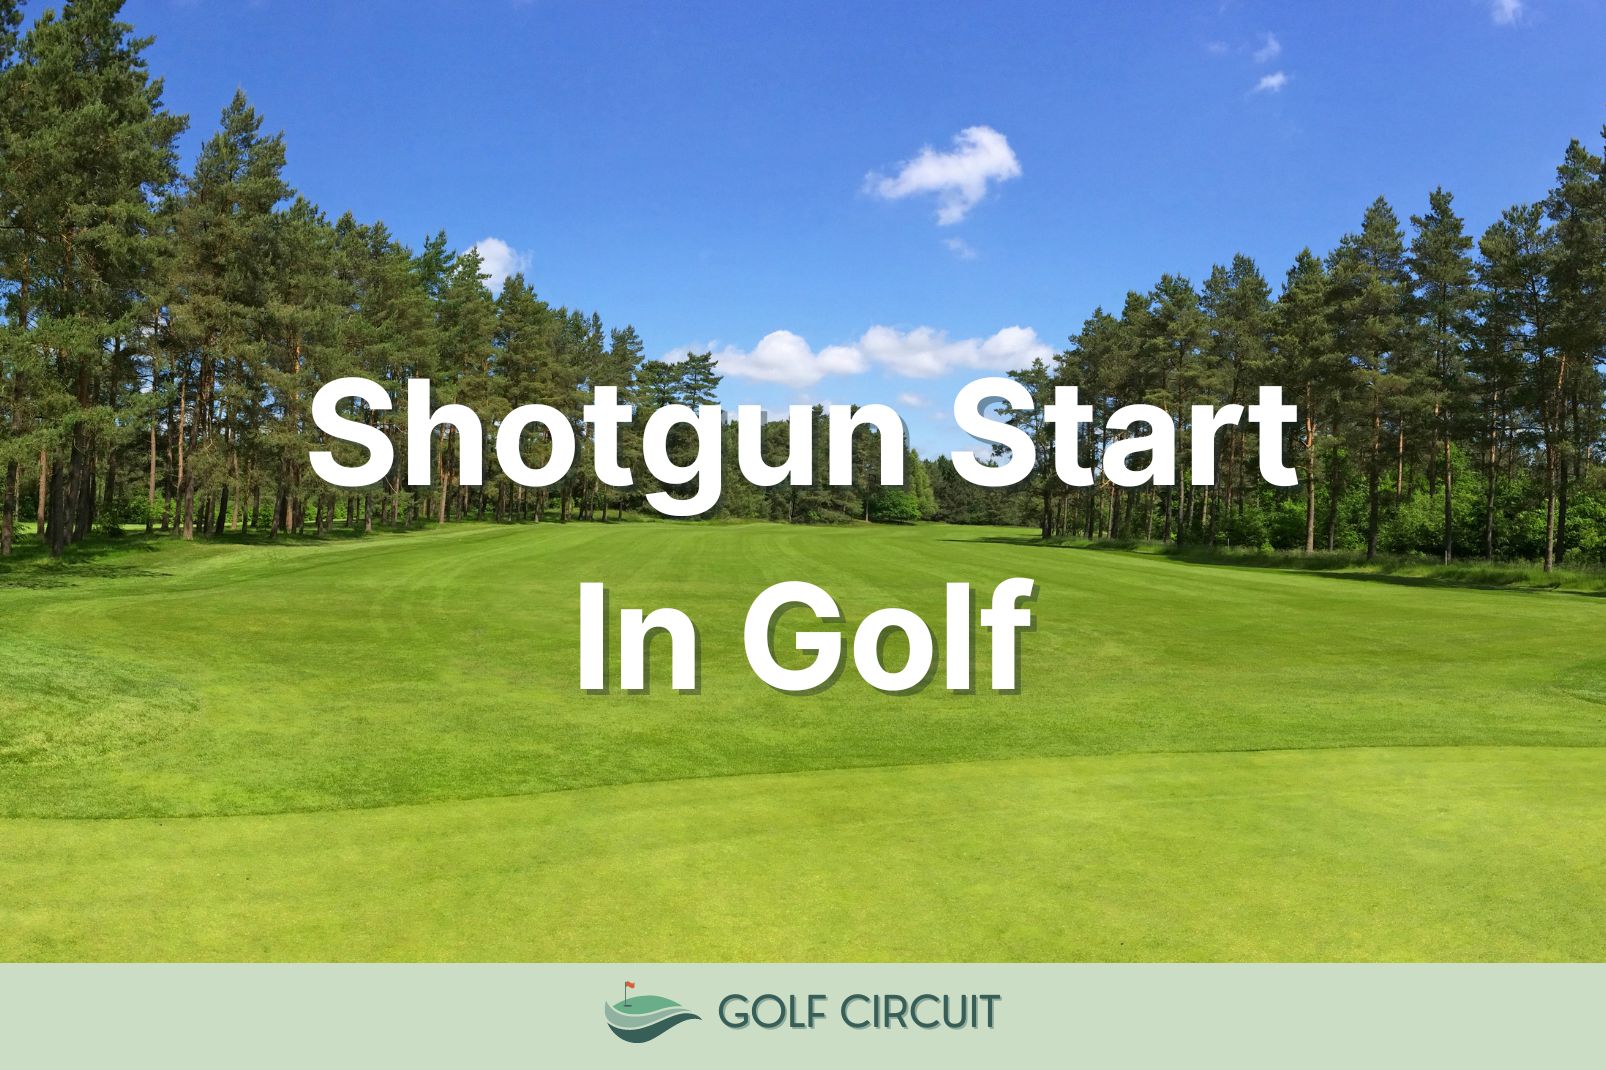 shotgun start in golf